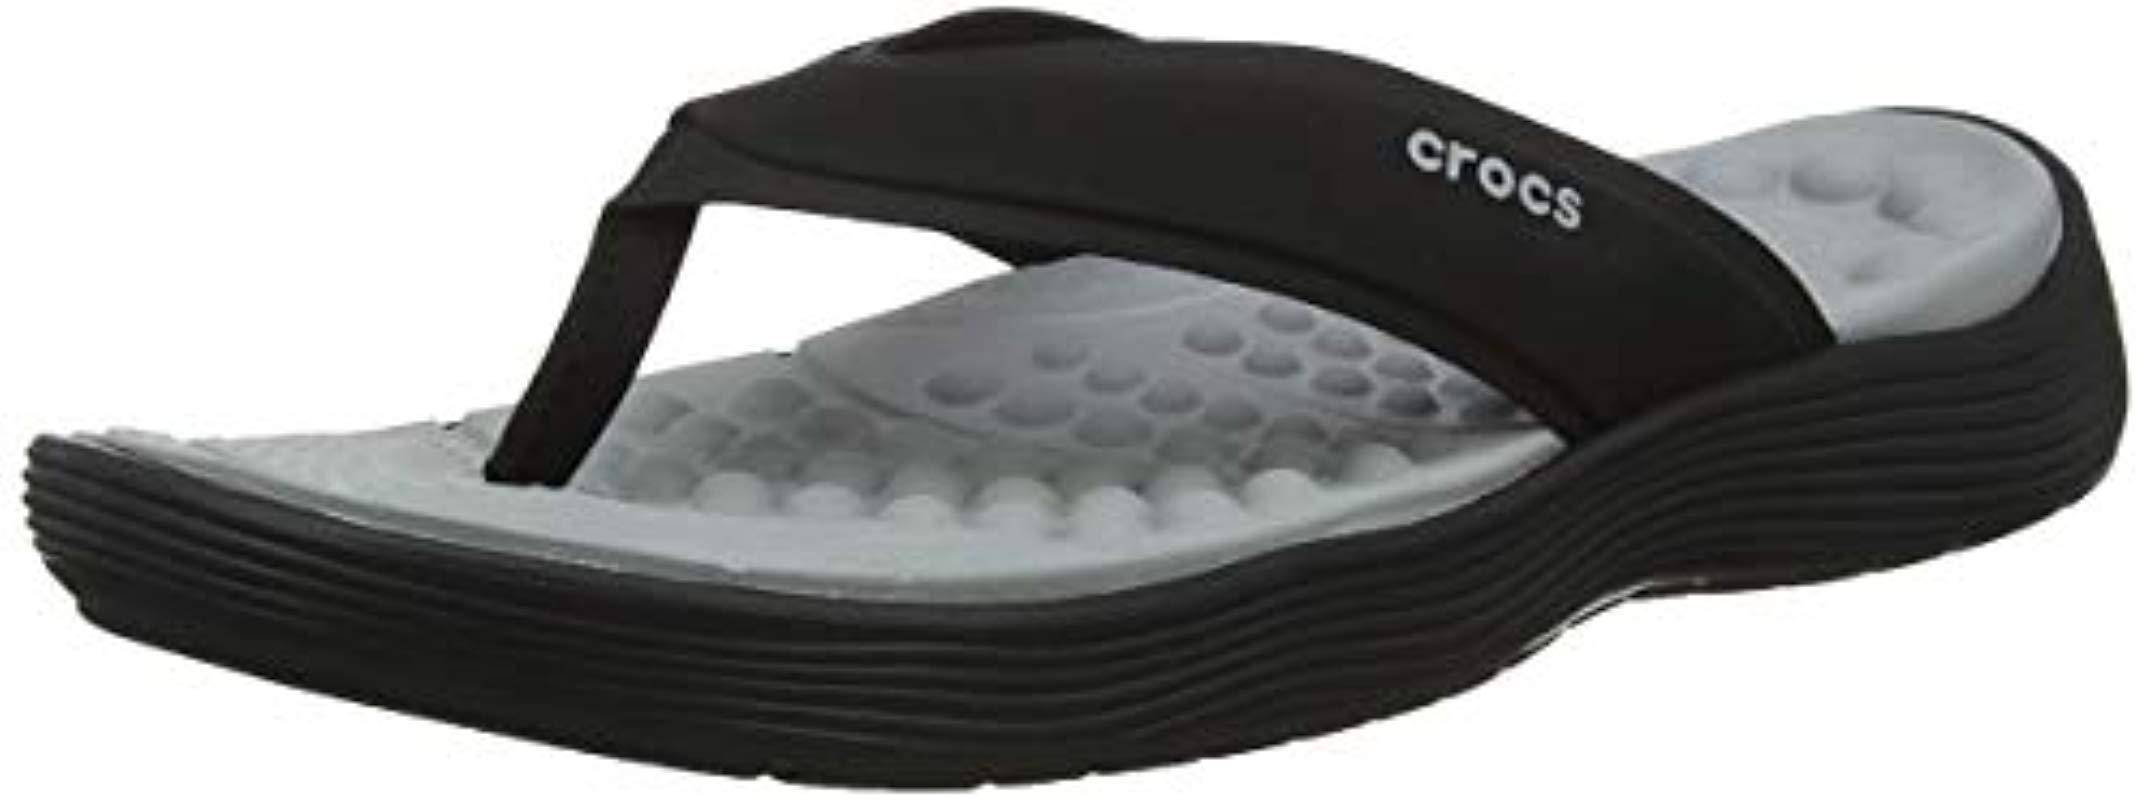 Crocs™ Reviva Womens Flip Flop Sandals in Black/Black (Black) | Lyst